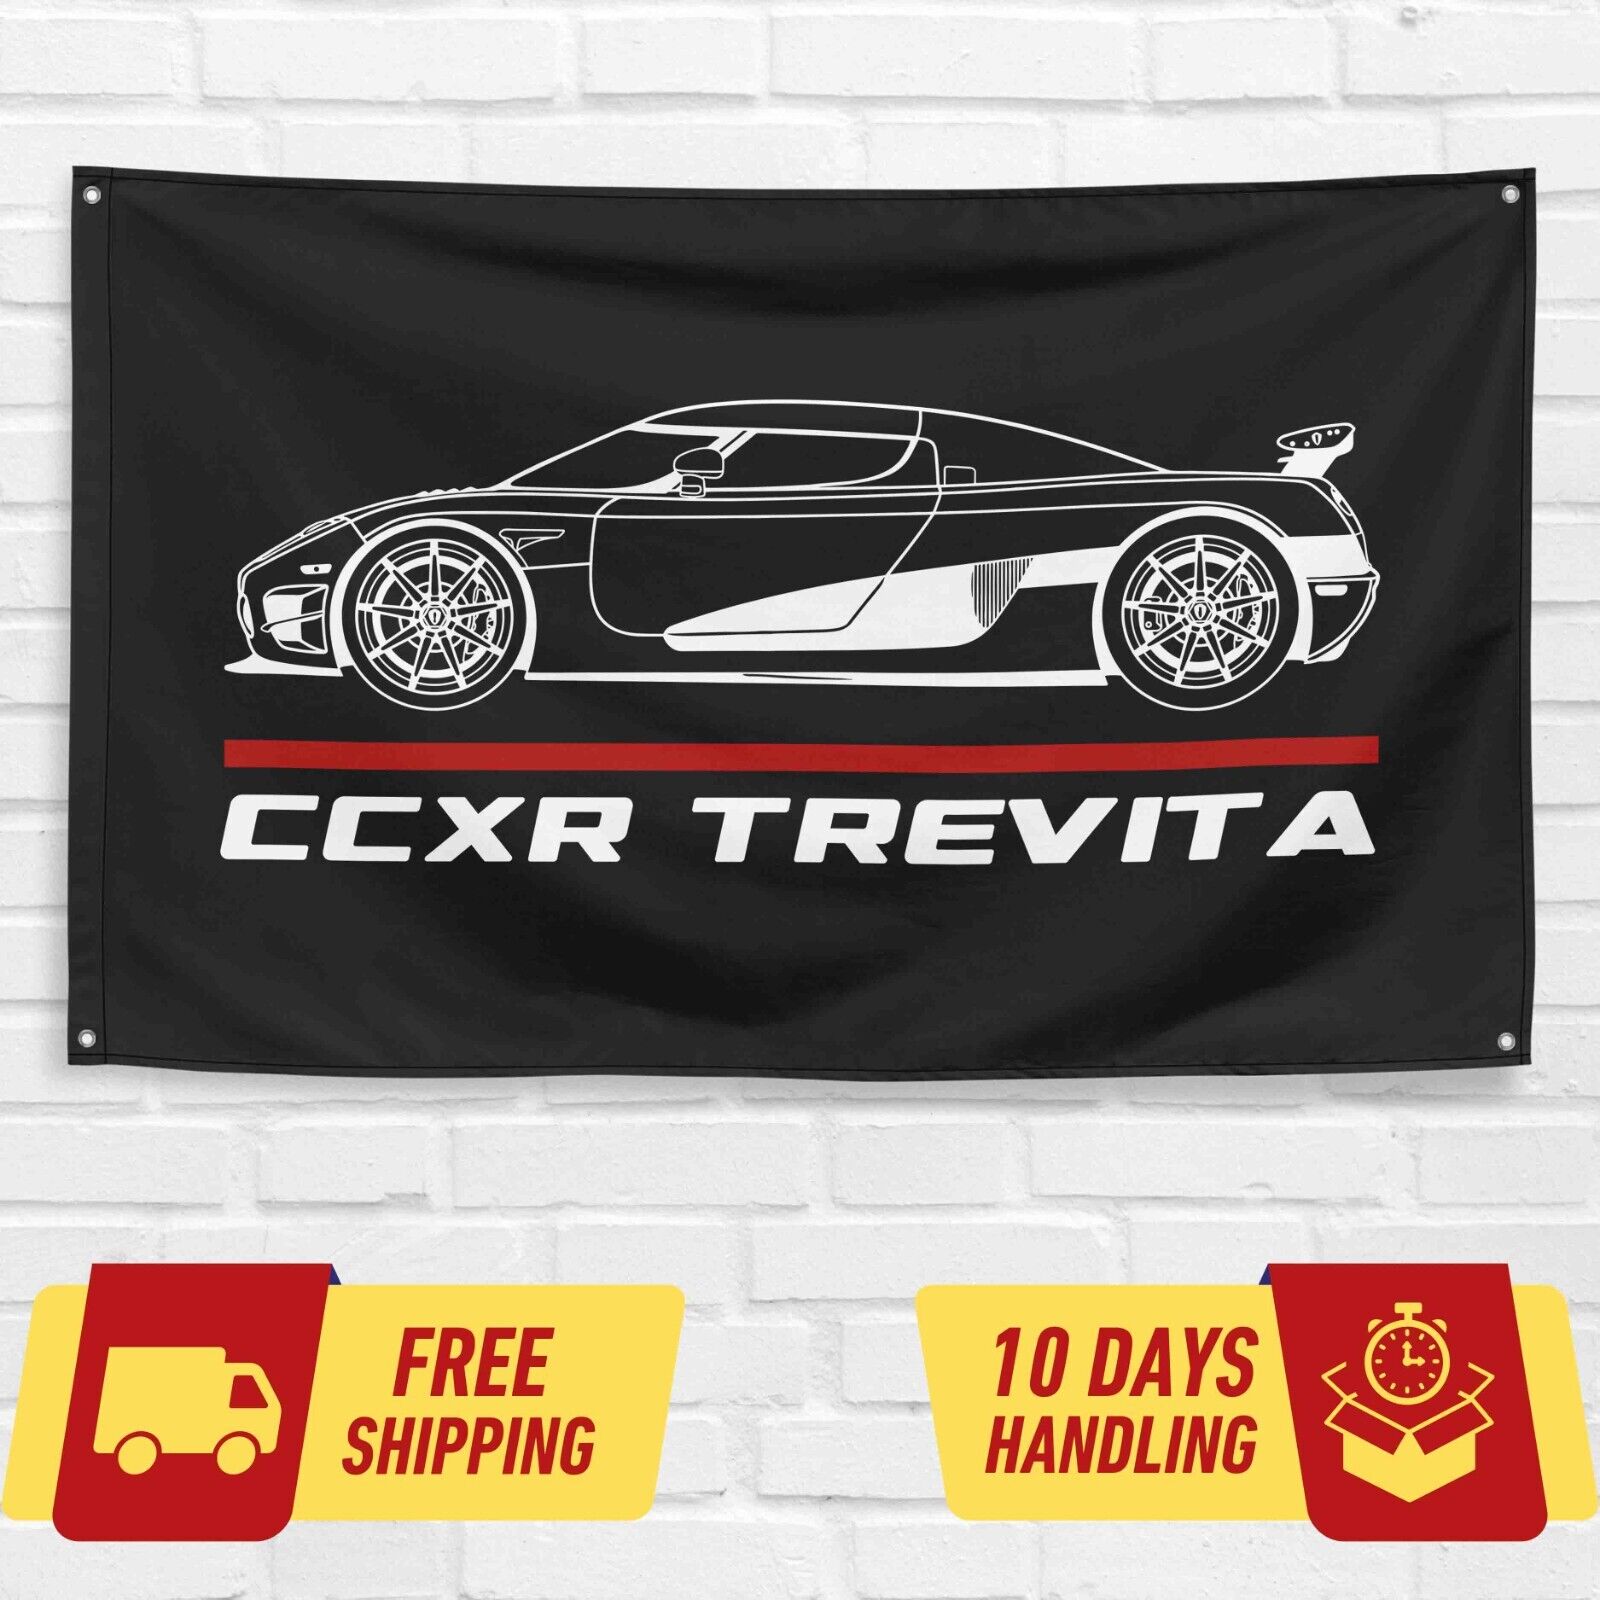 For Koenigsegg CCXR Trevita Supercar Car Enthusiast 3x5 ft Flag Gift Banner